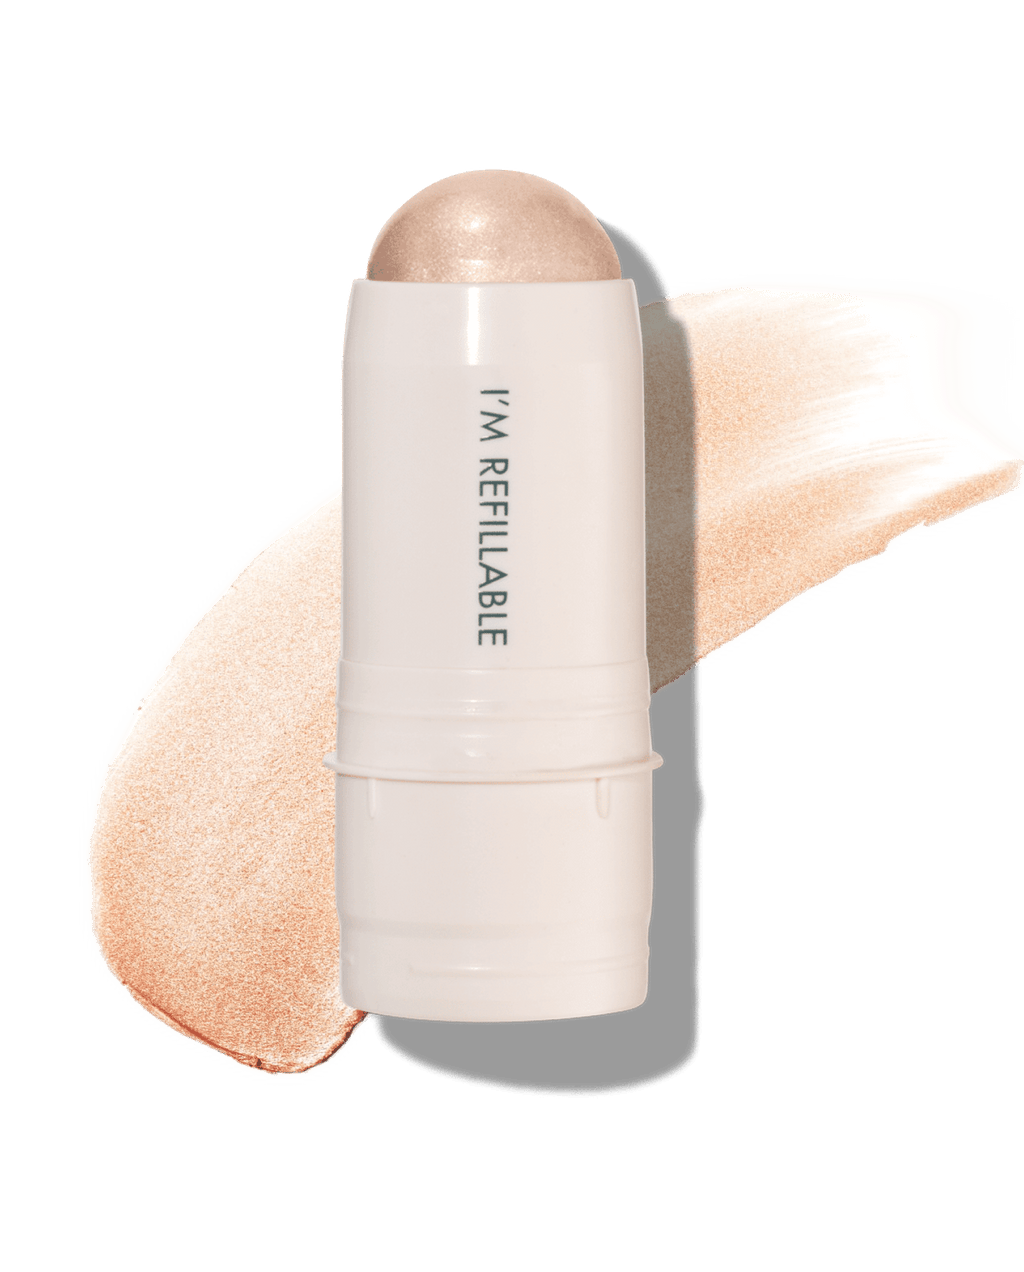 Highlighter Makeup - Cream, Powder & Highlighter Sticks